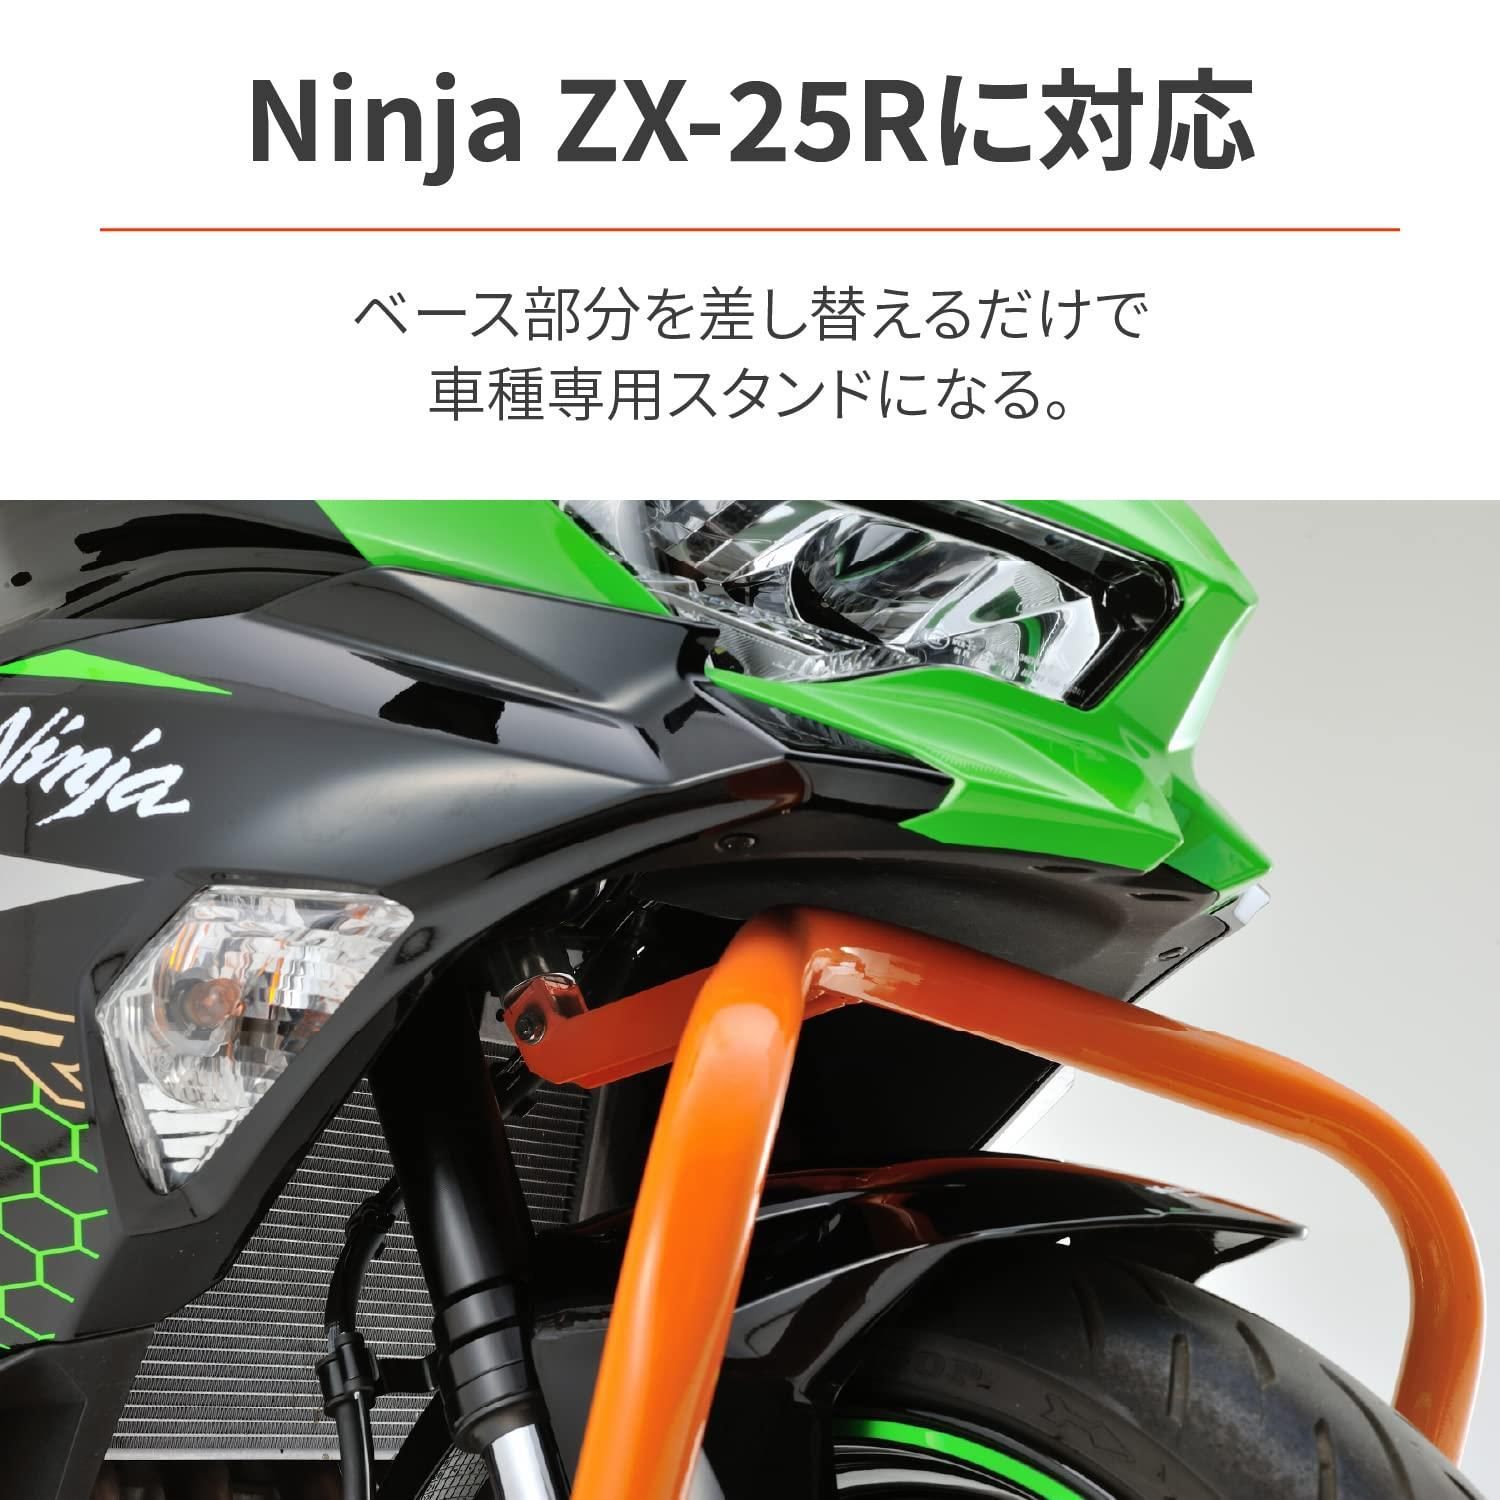 ☆FUNSHOP彡売り切れ御免☆ZX-25R専用 デイトナ(Daytona) バイク用 